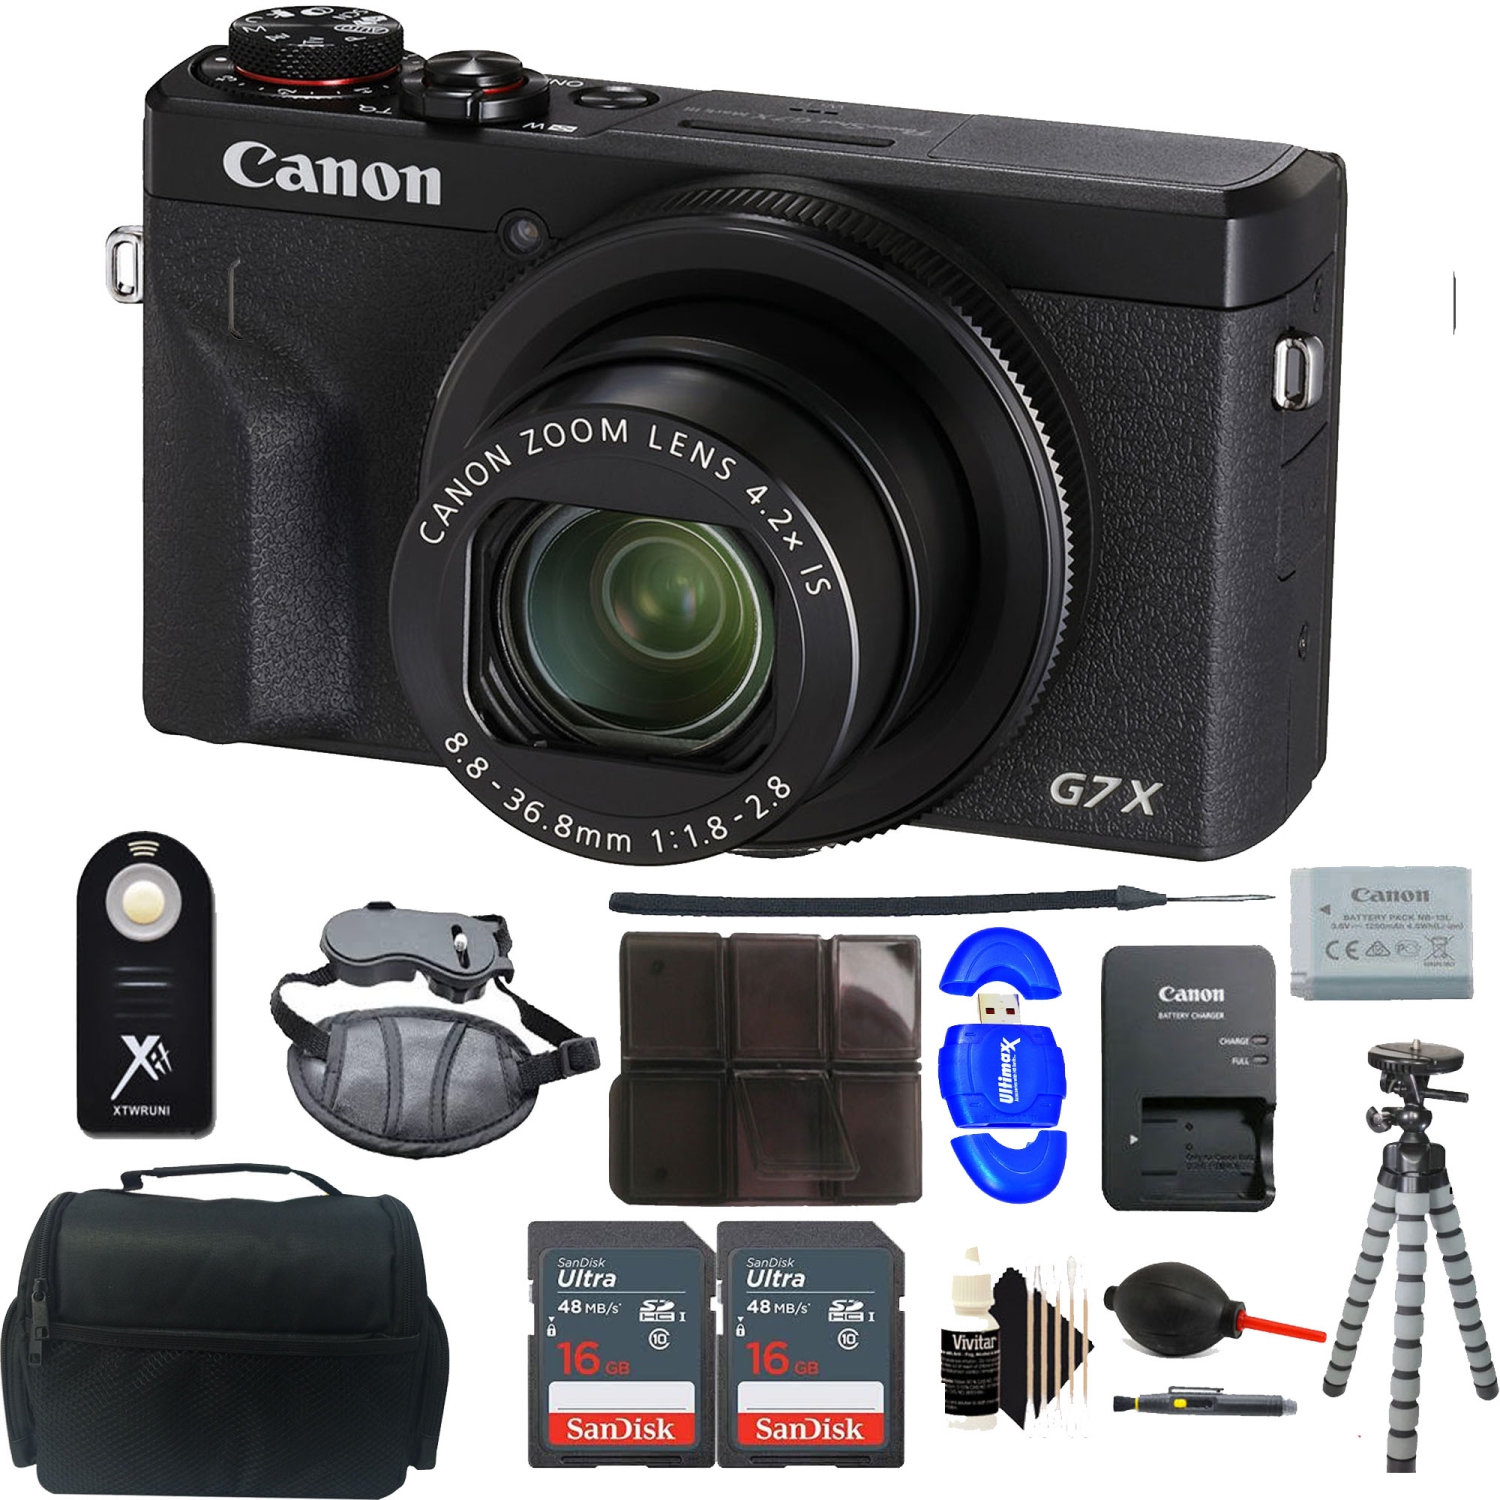 Canon PowerShot G7 X Mark III Digital Camera (Black) with 32GB Accessory Kit Black - US Version w/ Seller Warranty